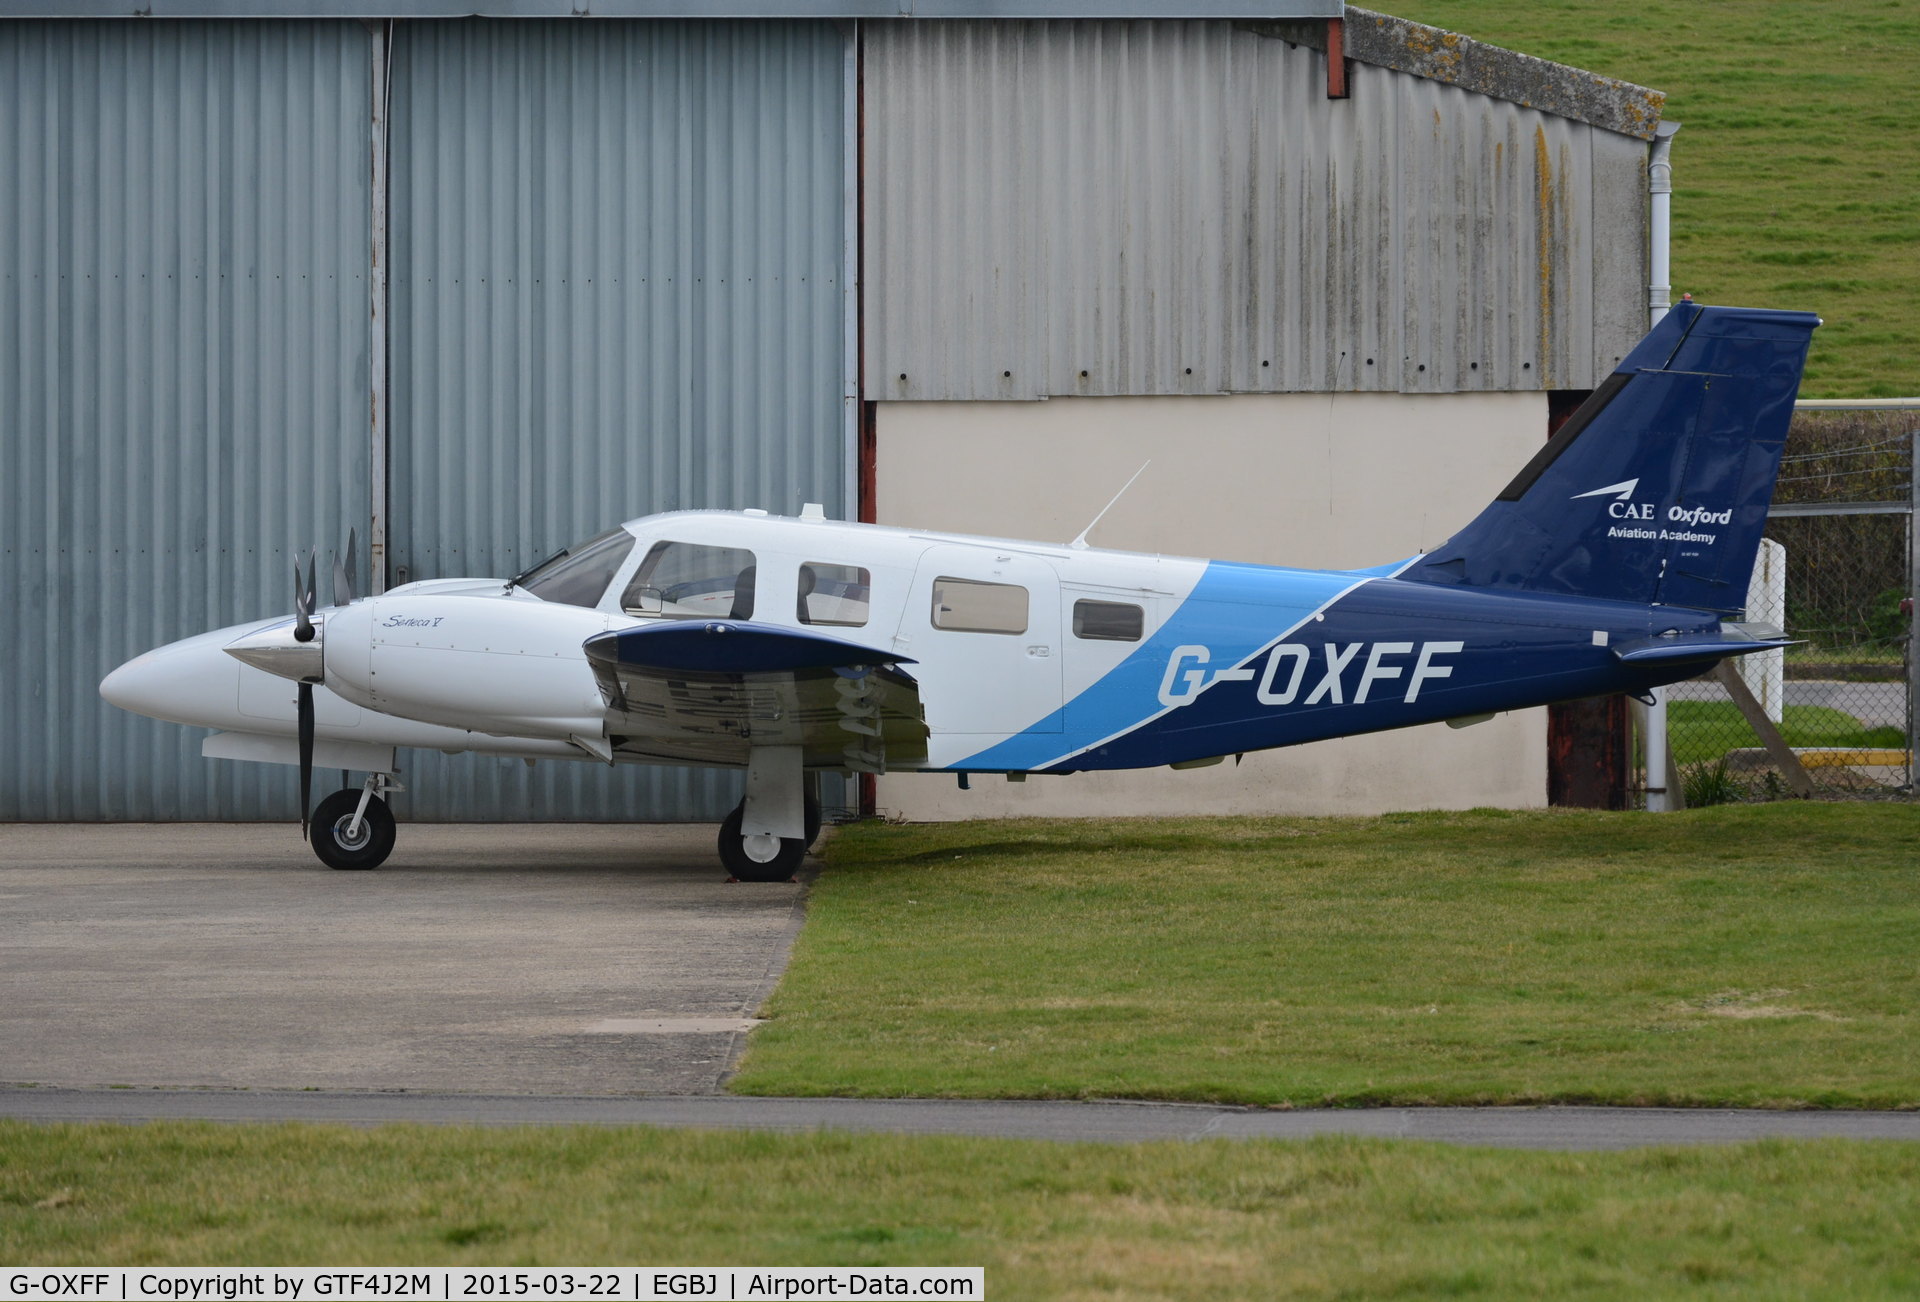 G-OXFF, 2013 Piper PA-34-220T Seneca V C/N 34-49485, G-OXFF at Staverton 22.3.15